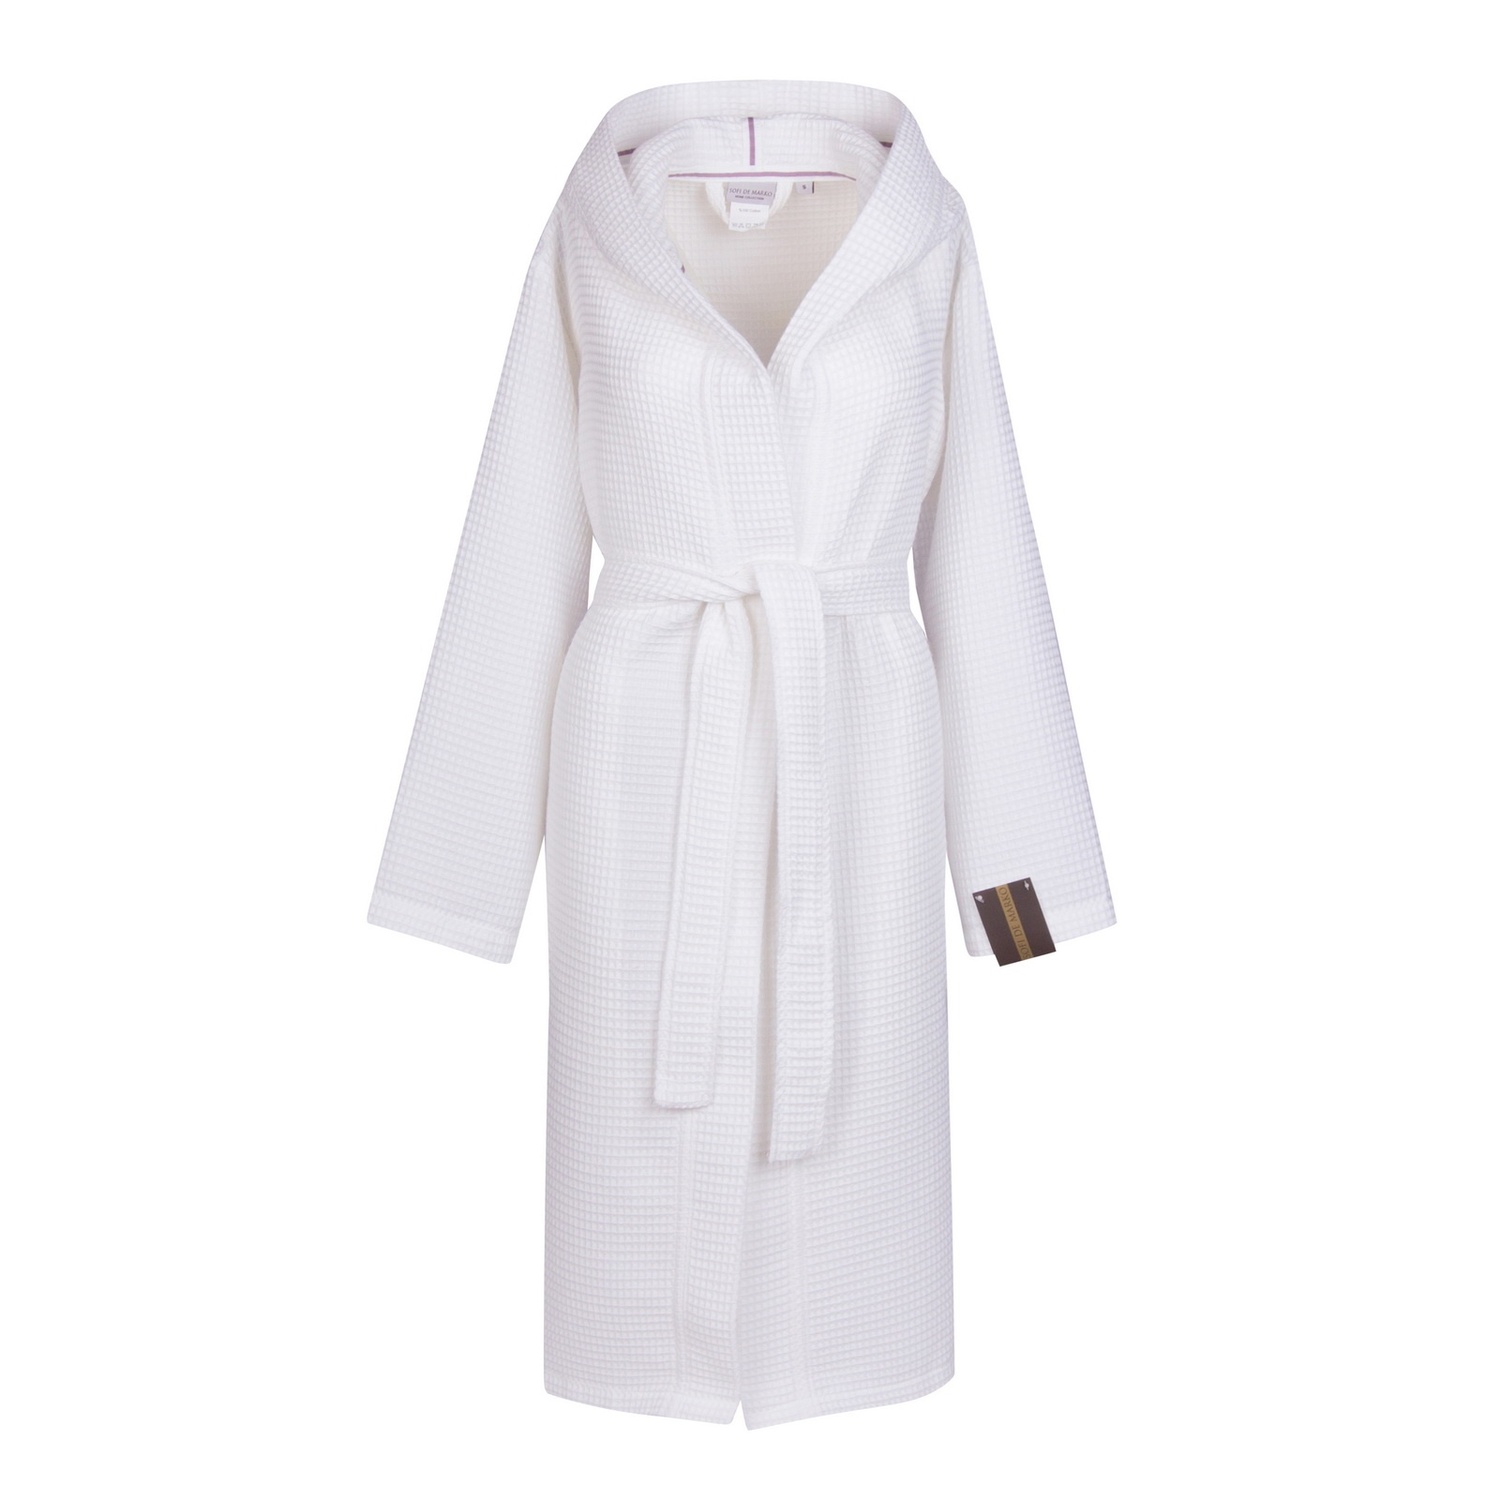 Банный халат Наоми цвет: белый (L)